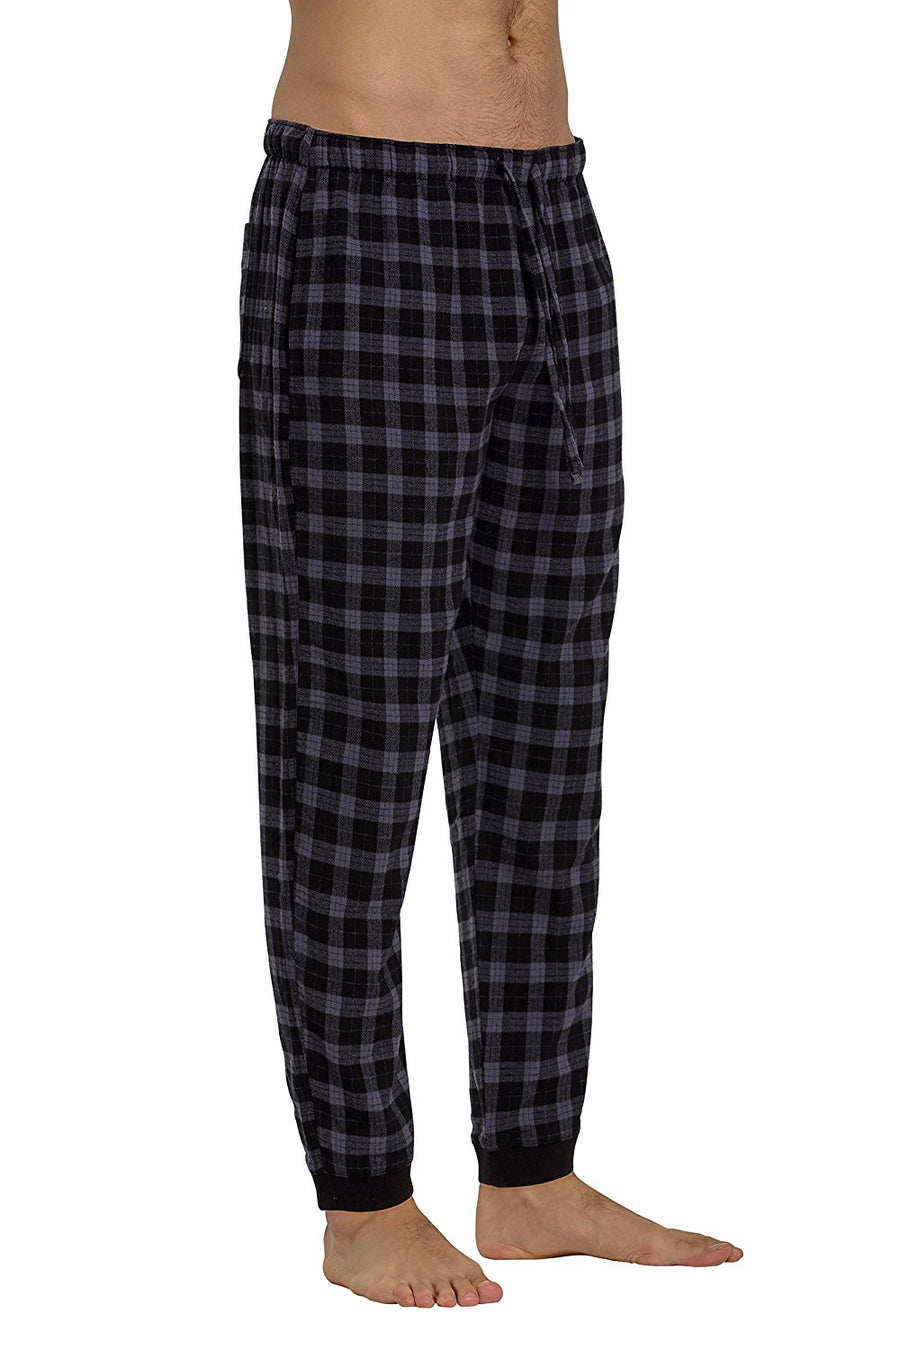 CYZ Men's 100% Cotton Flannel Jogger Pajama Lounge Pant – CYZ Collection